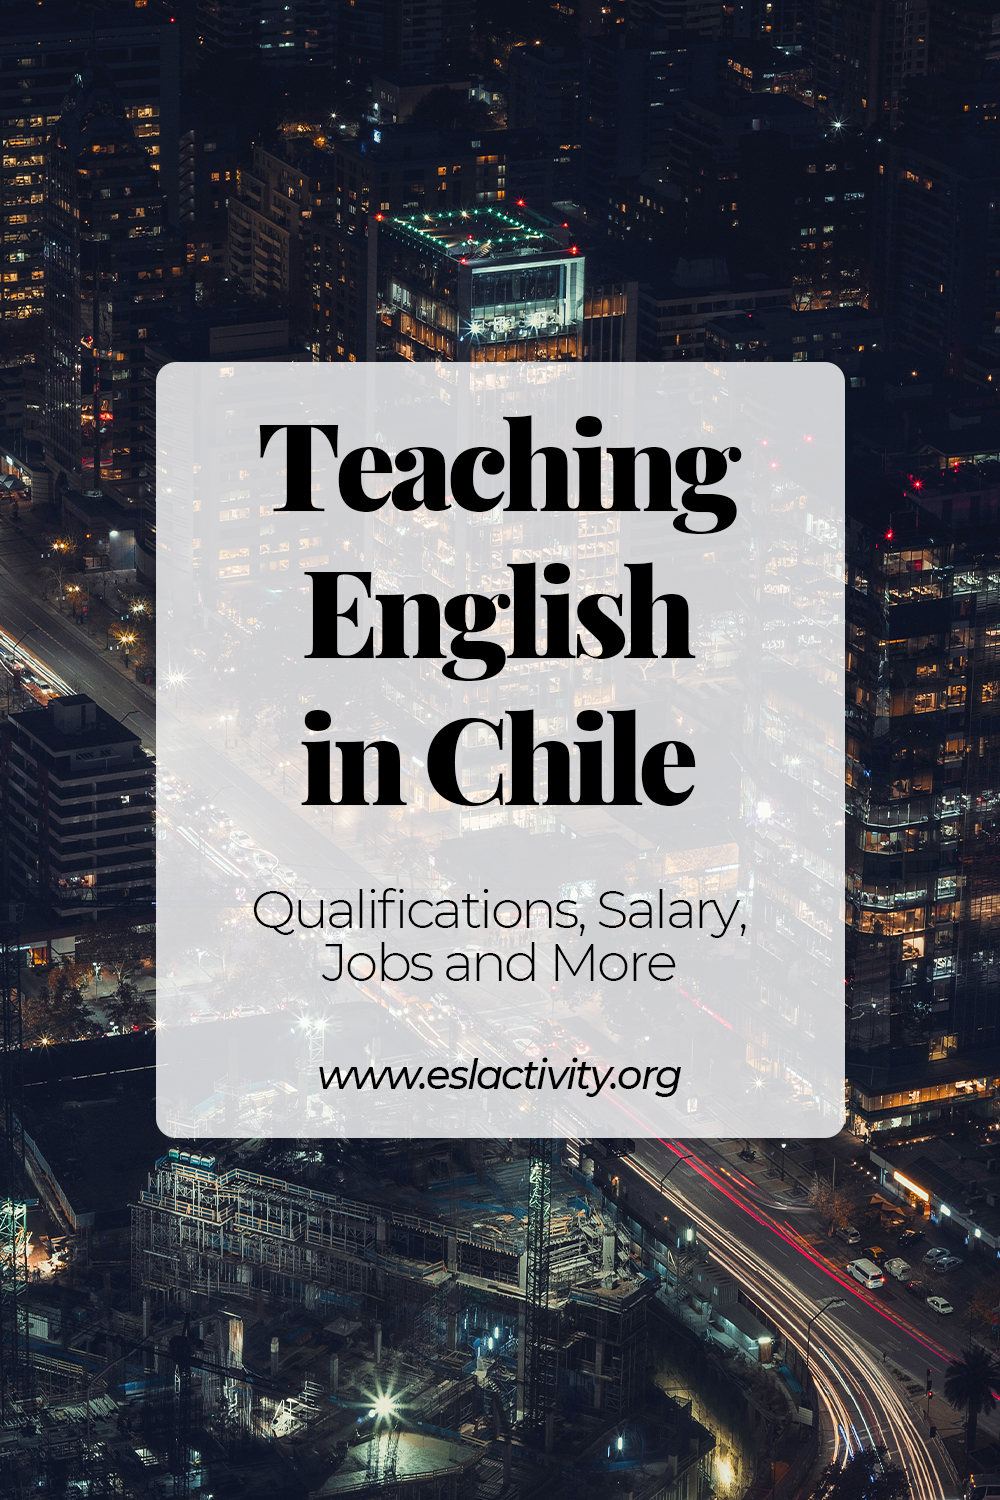 English teaching jobs in chile